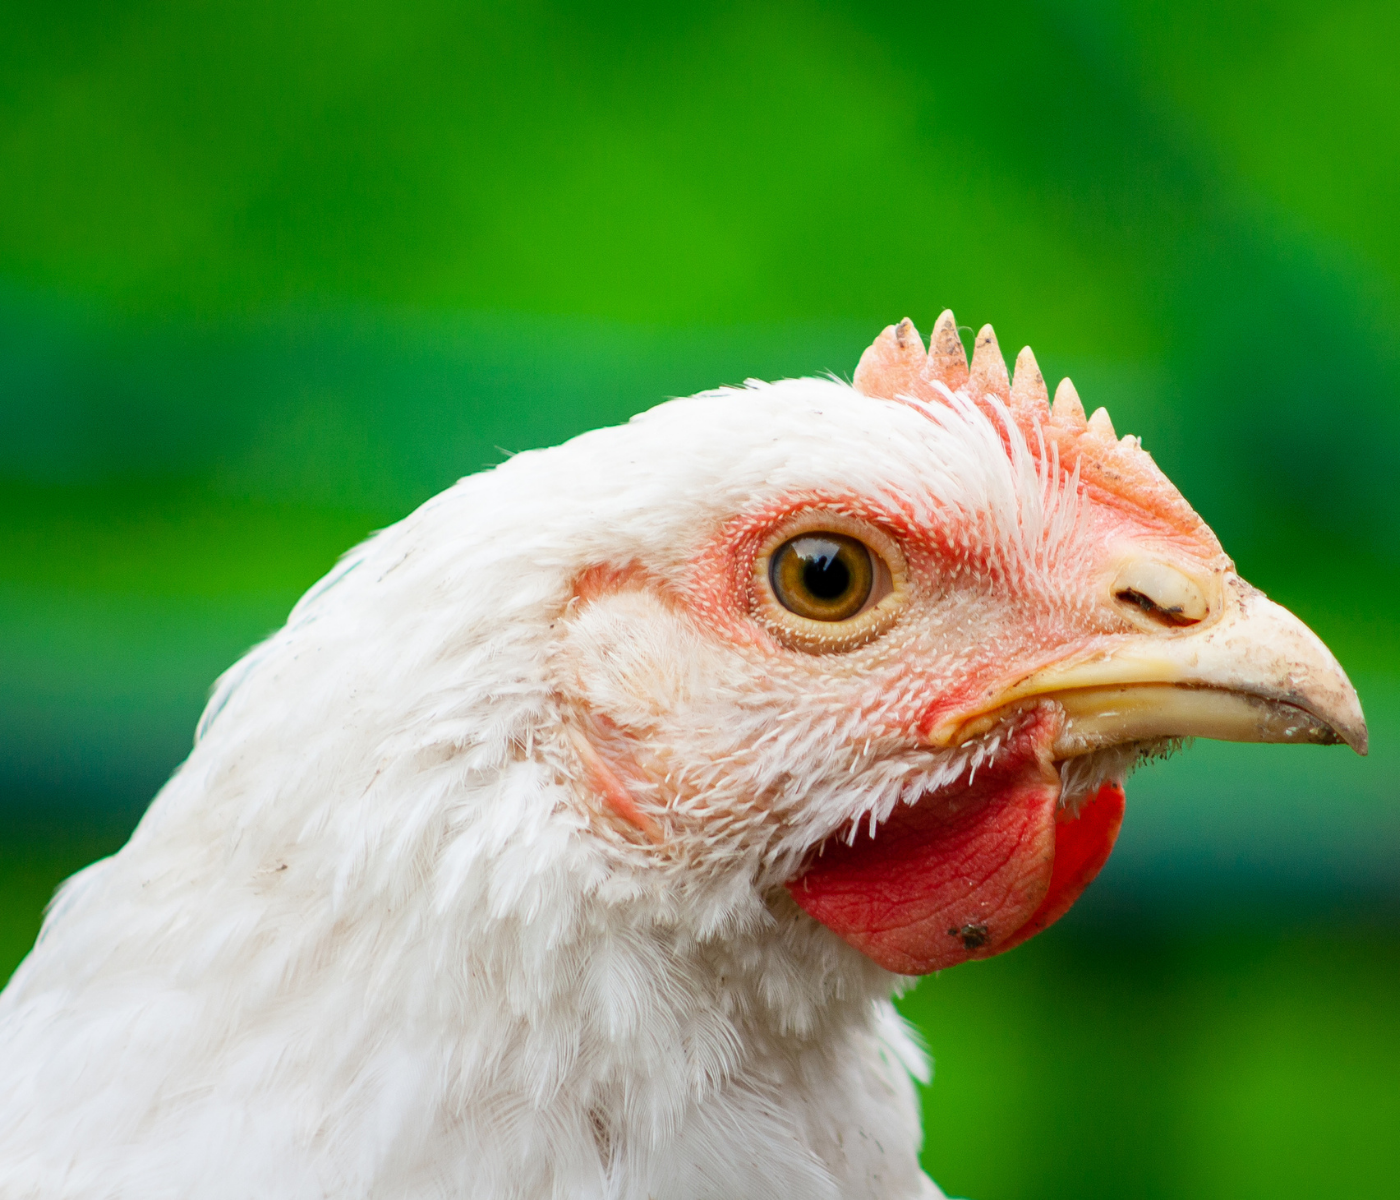 First outbreak of Newcastle disease in poultry in Spain since 2009